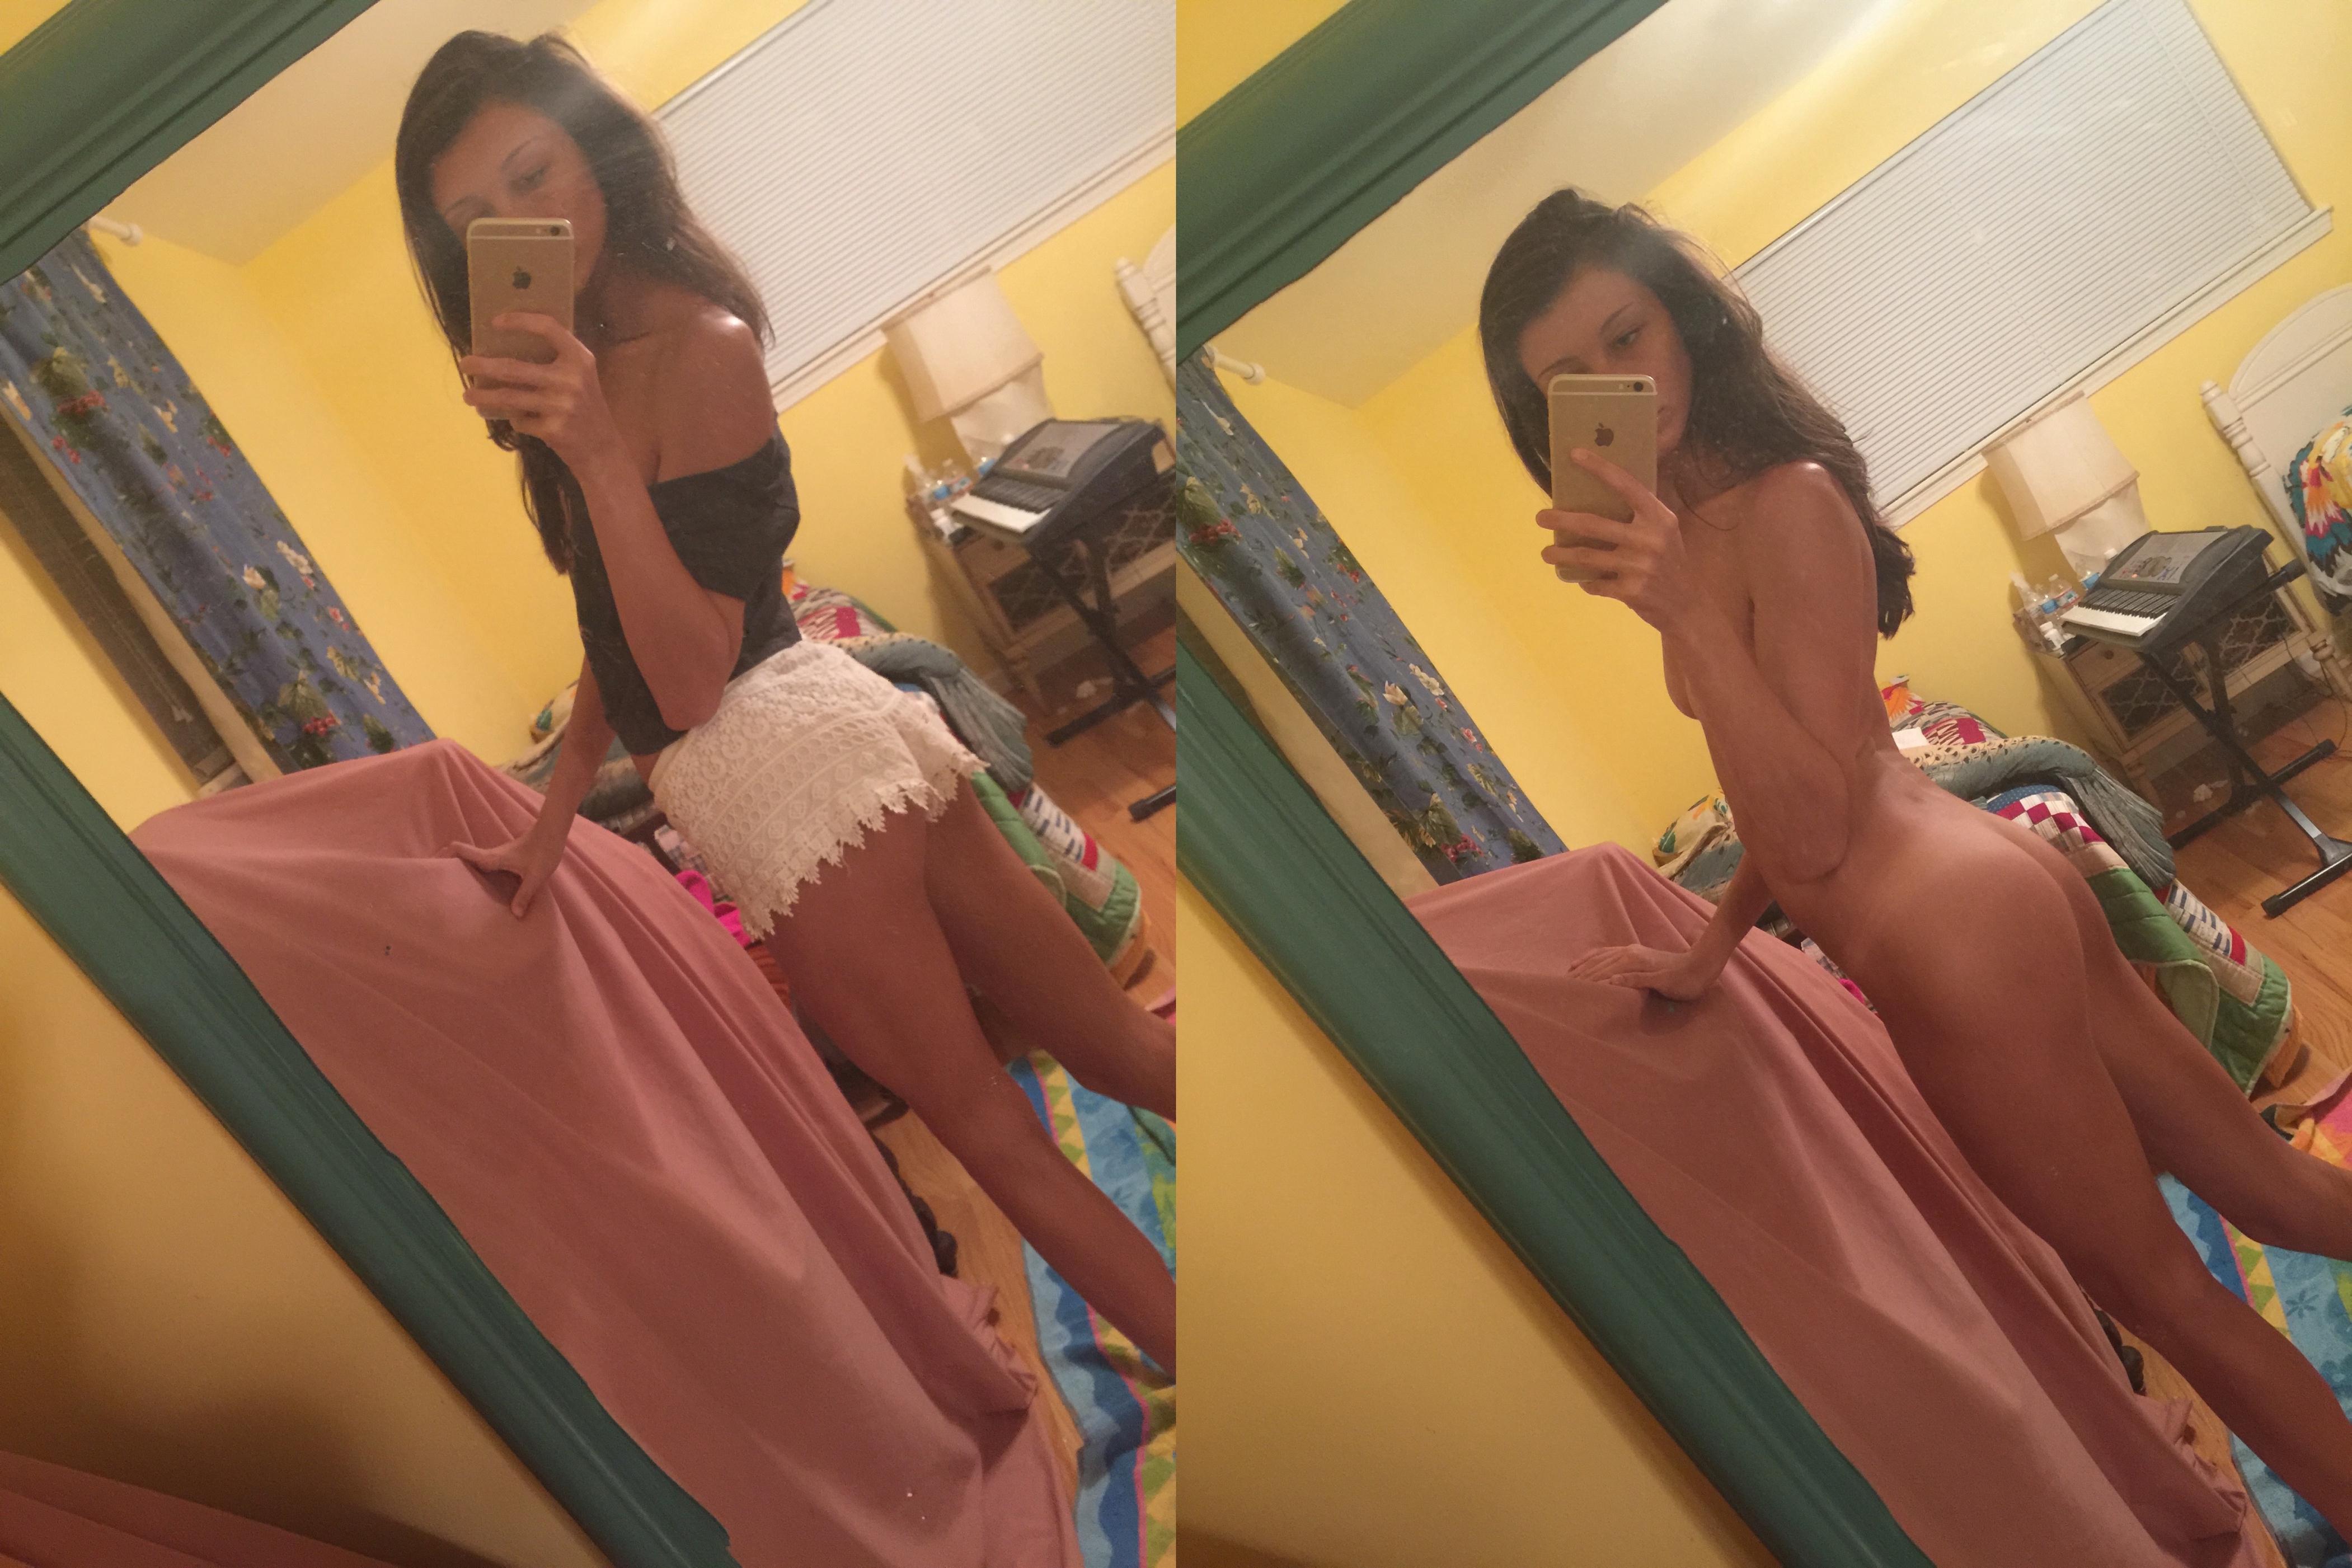 slim-body-amateur-girl-selfie-pics-mirror-nude-25